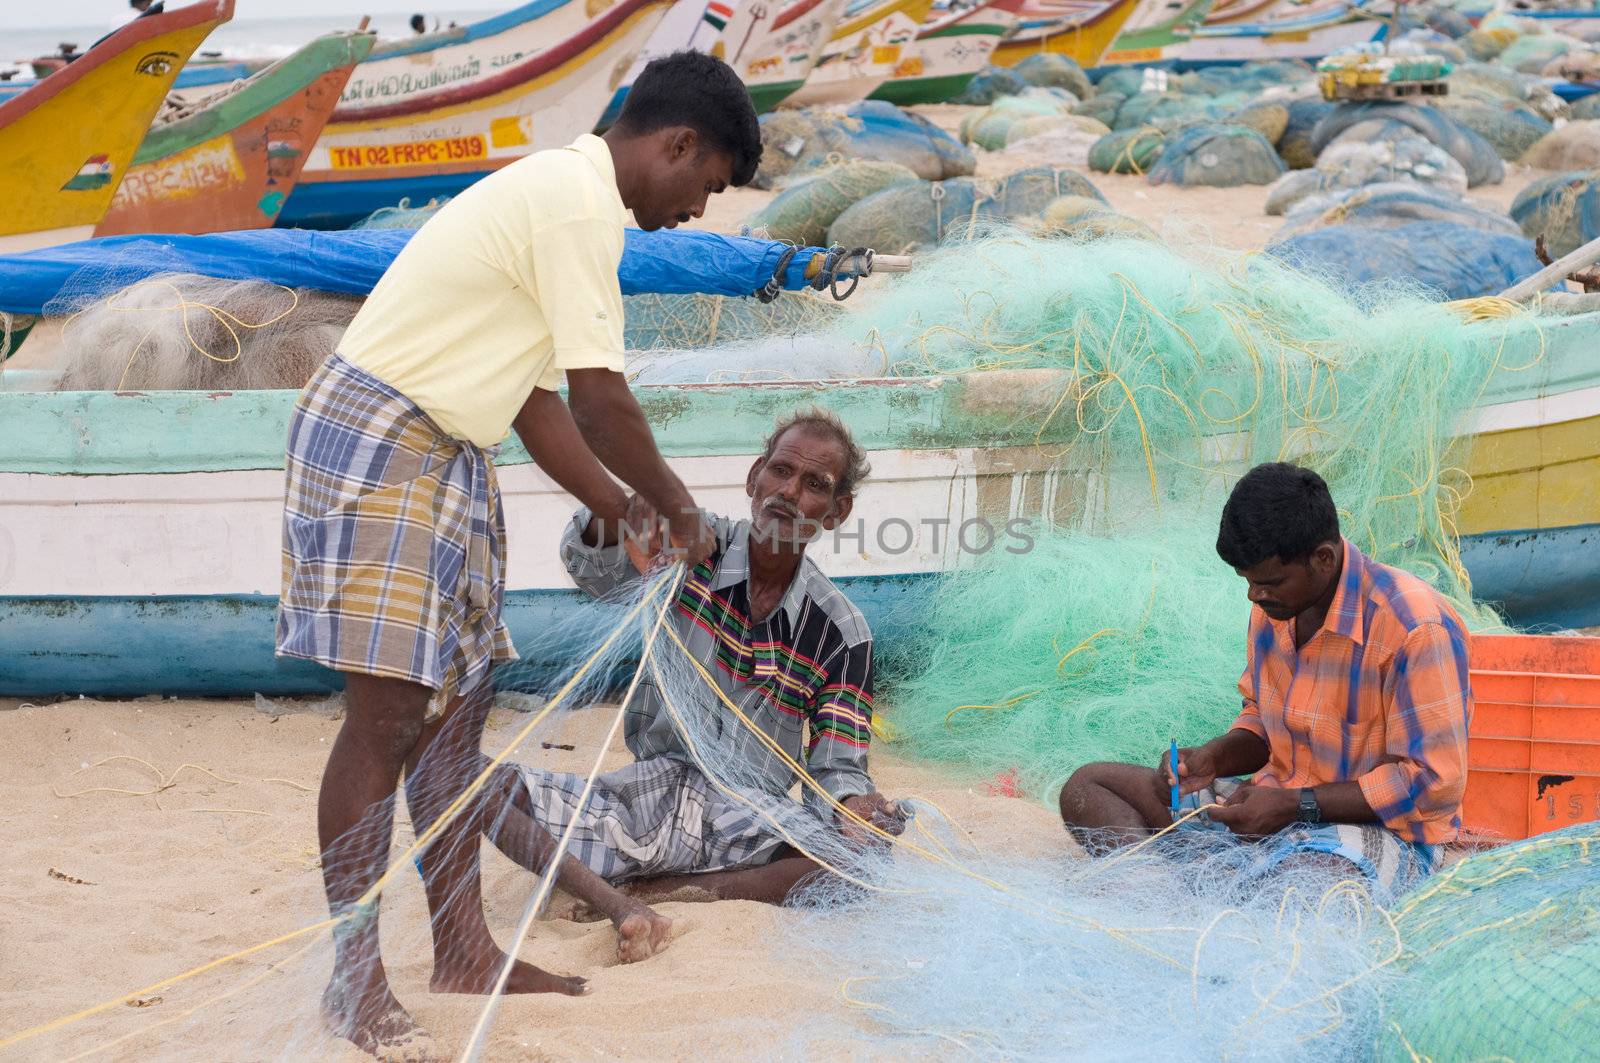 Fisherman weaving nets in the Indian coastline by pazham